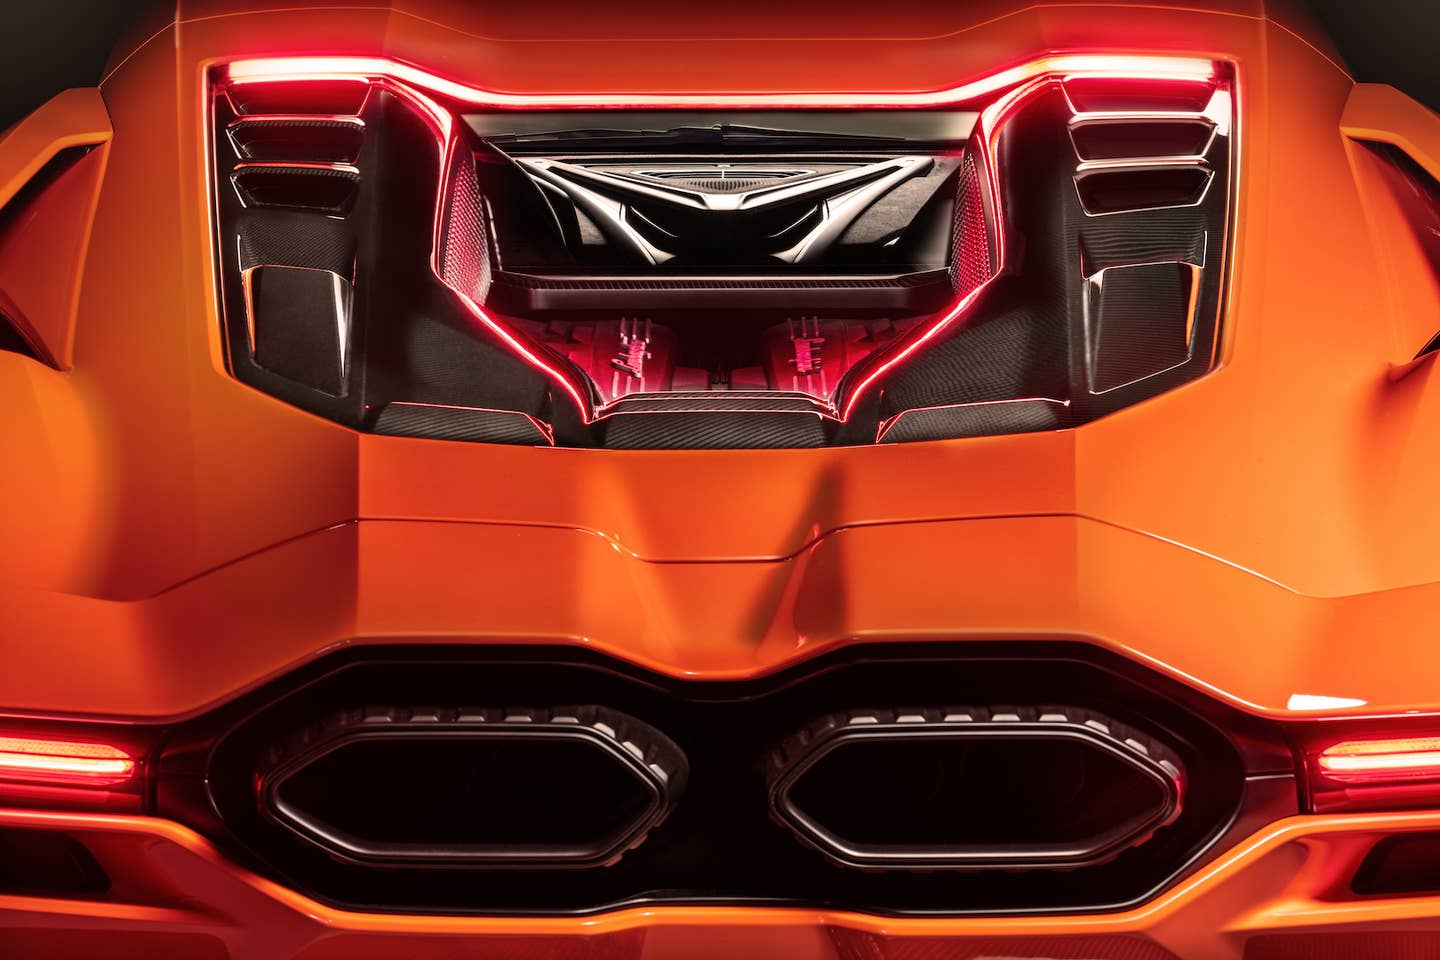 Lamborghini Revuelto engine and exhaust tips